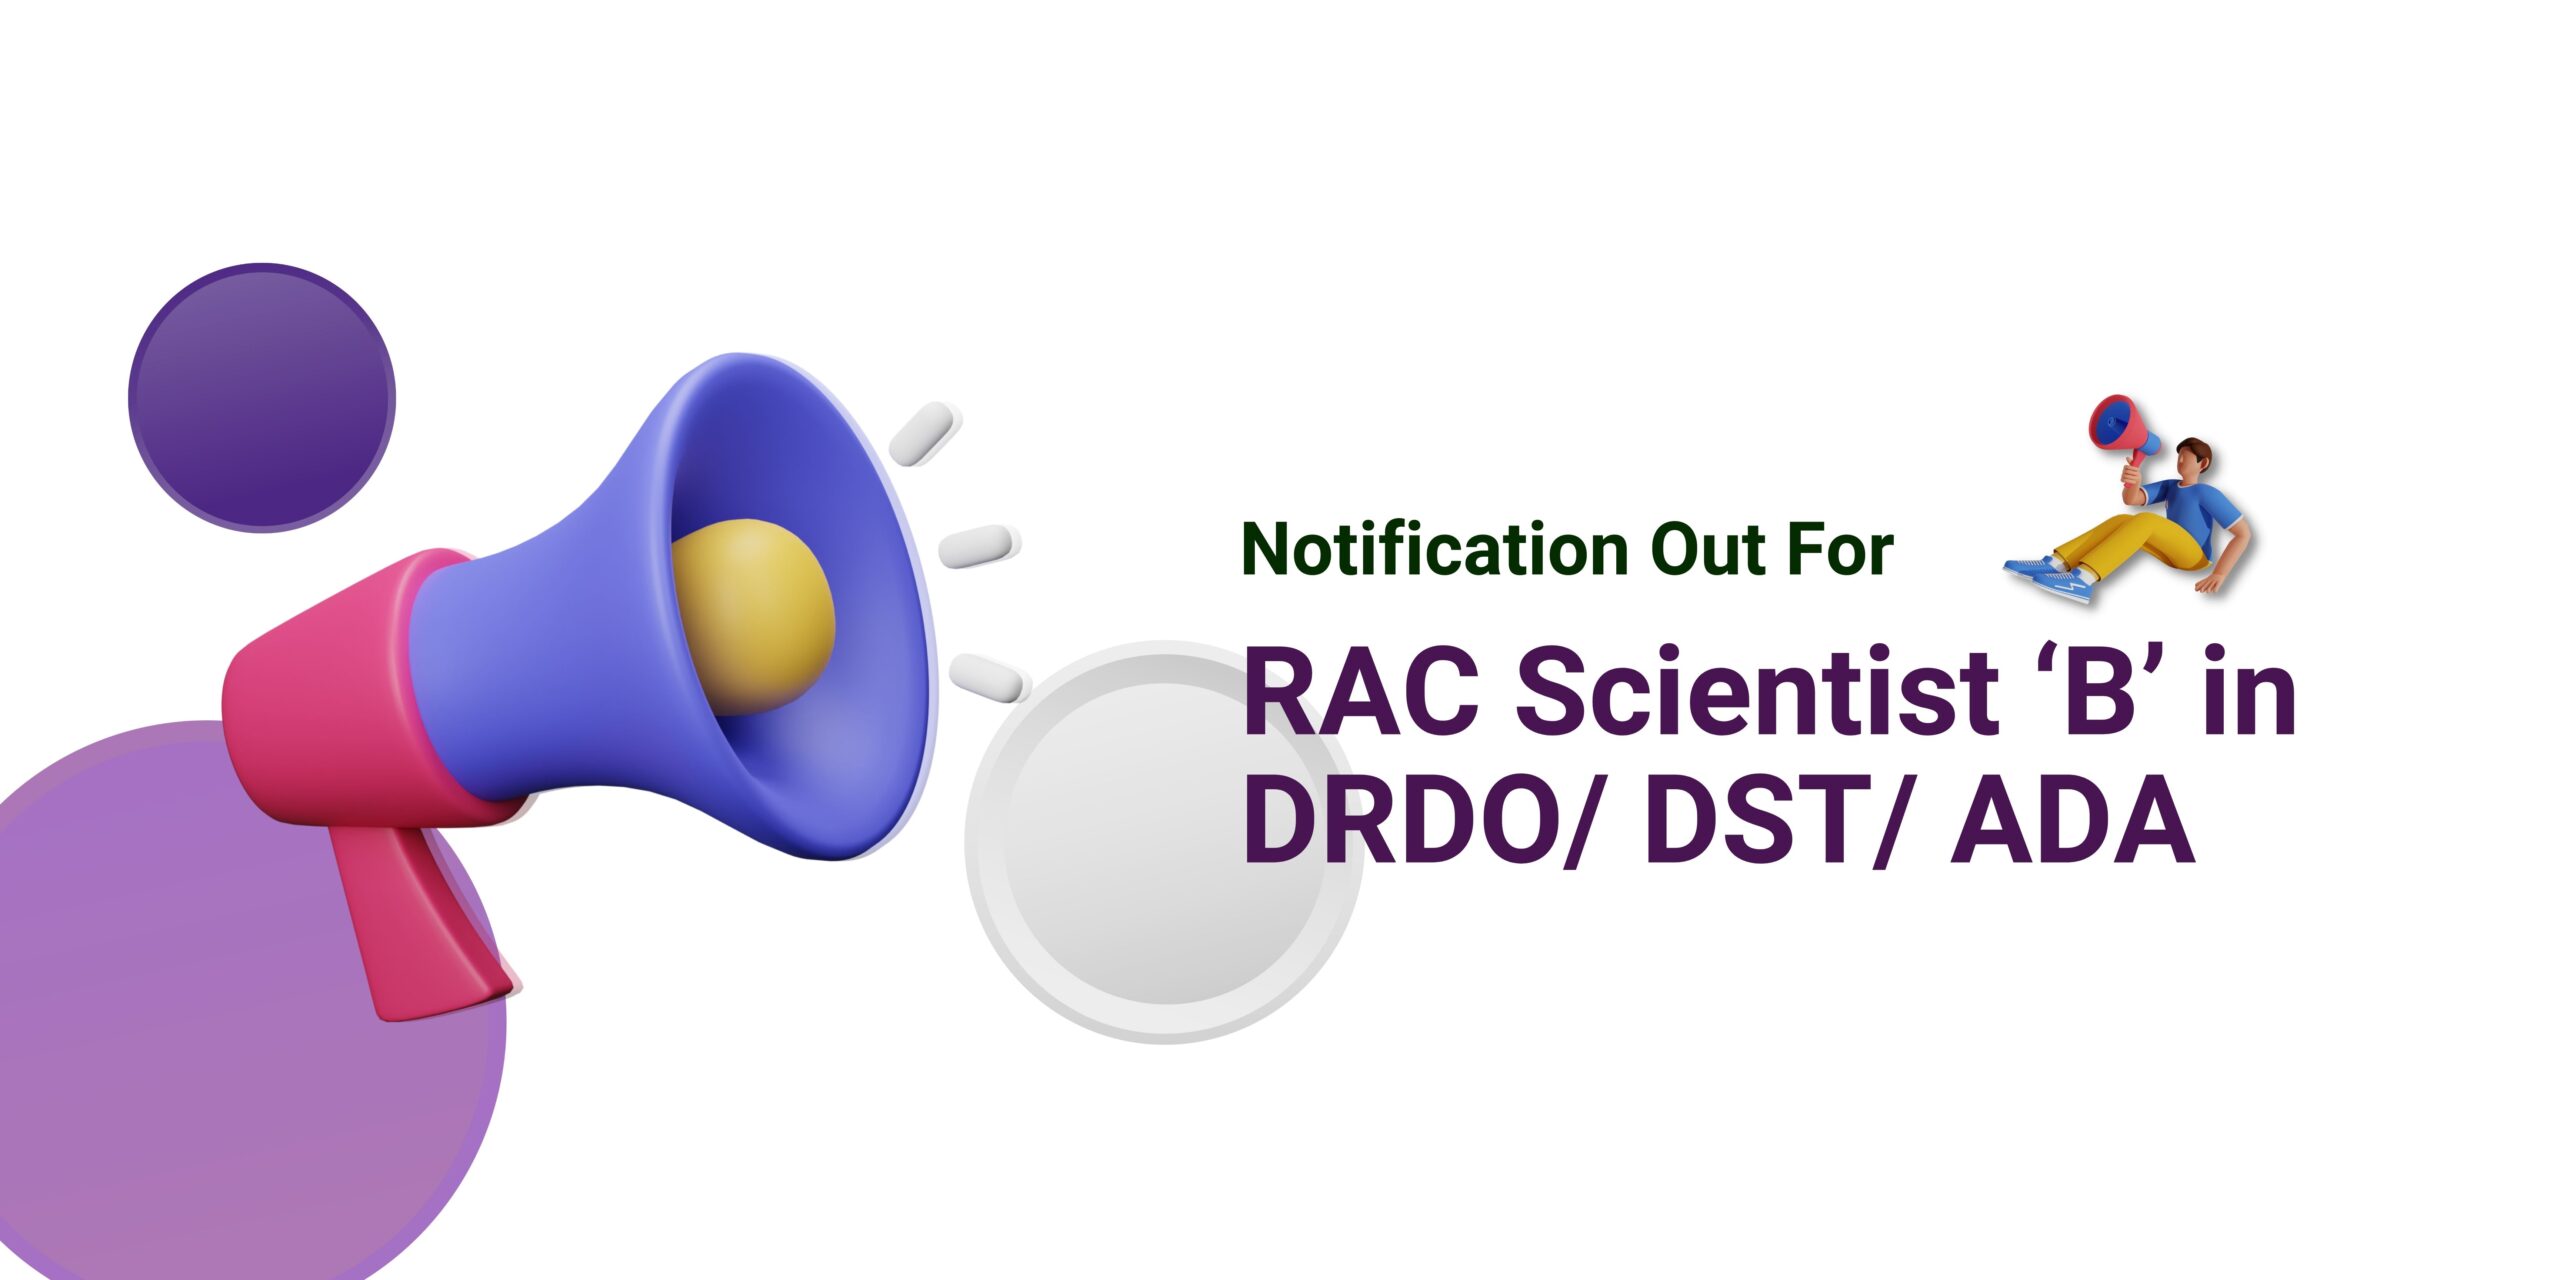 RAC Scientist ‘B’ in DRDO/ DST/ ADA